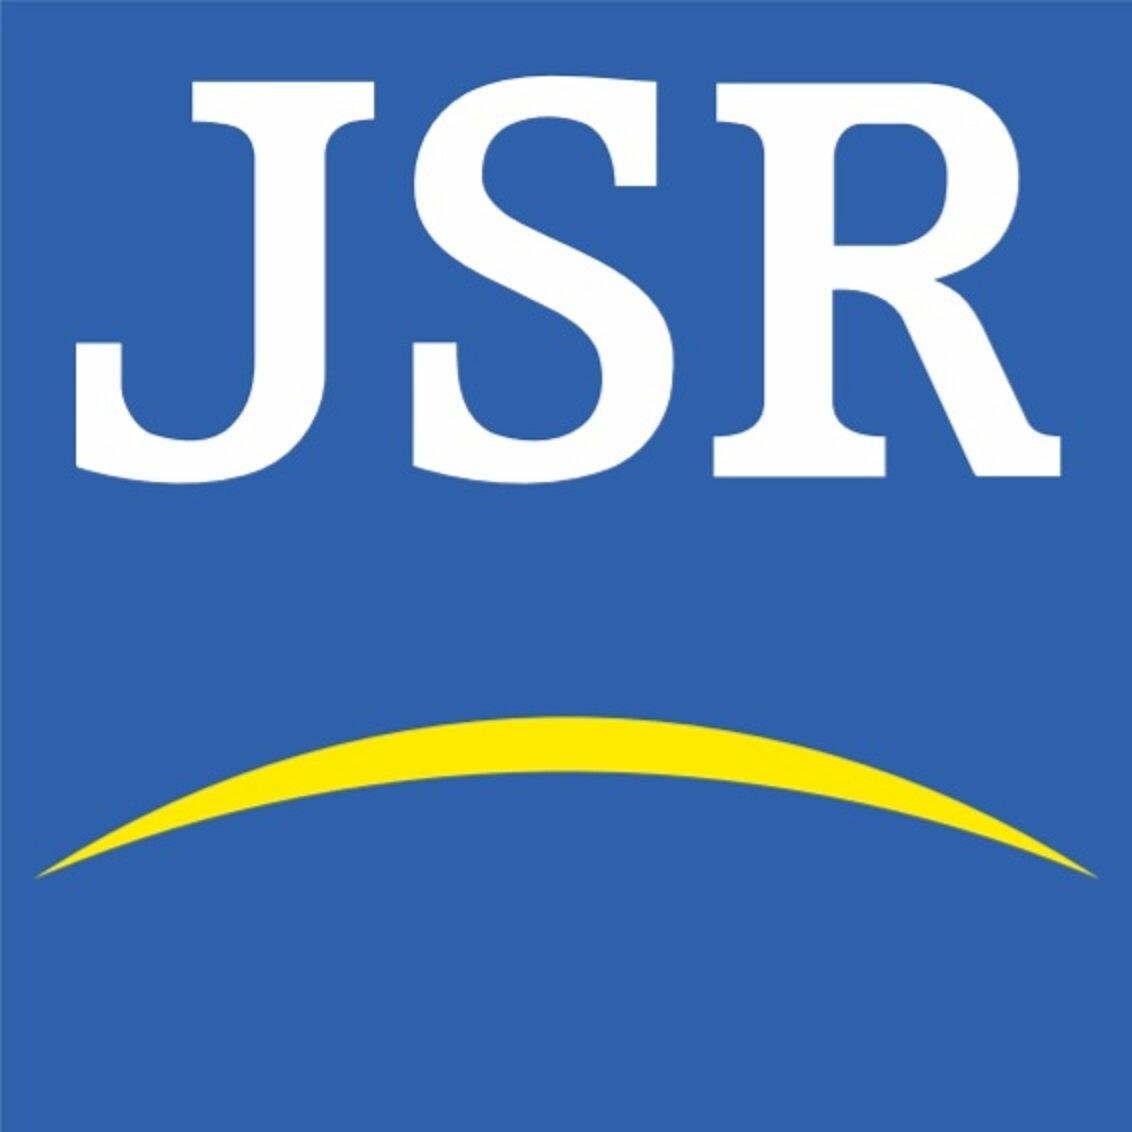 JSR、エラストマー事業をENEOSに売却